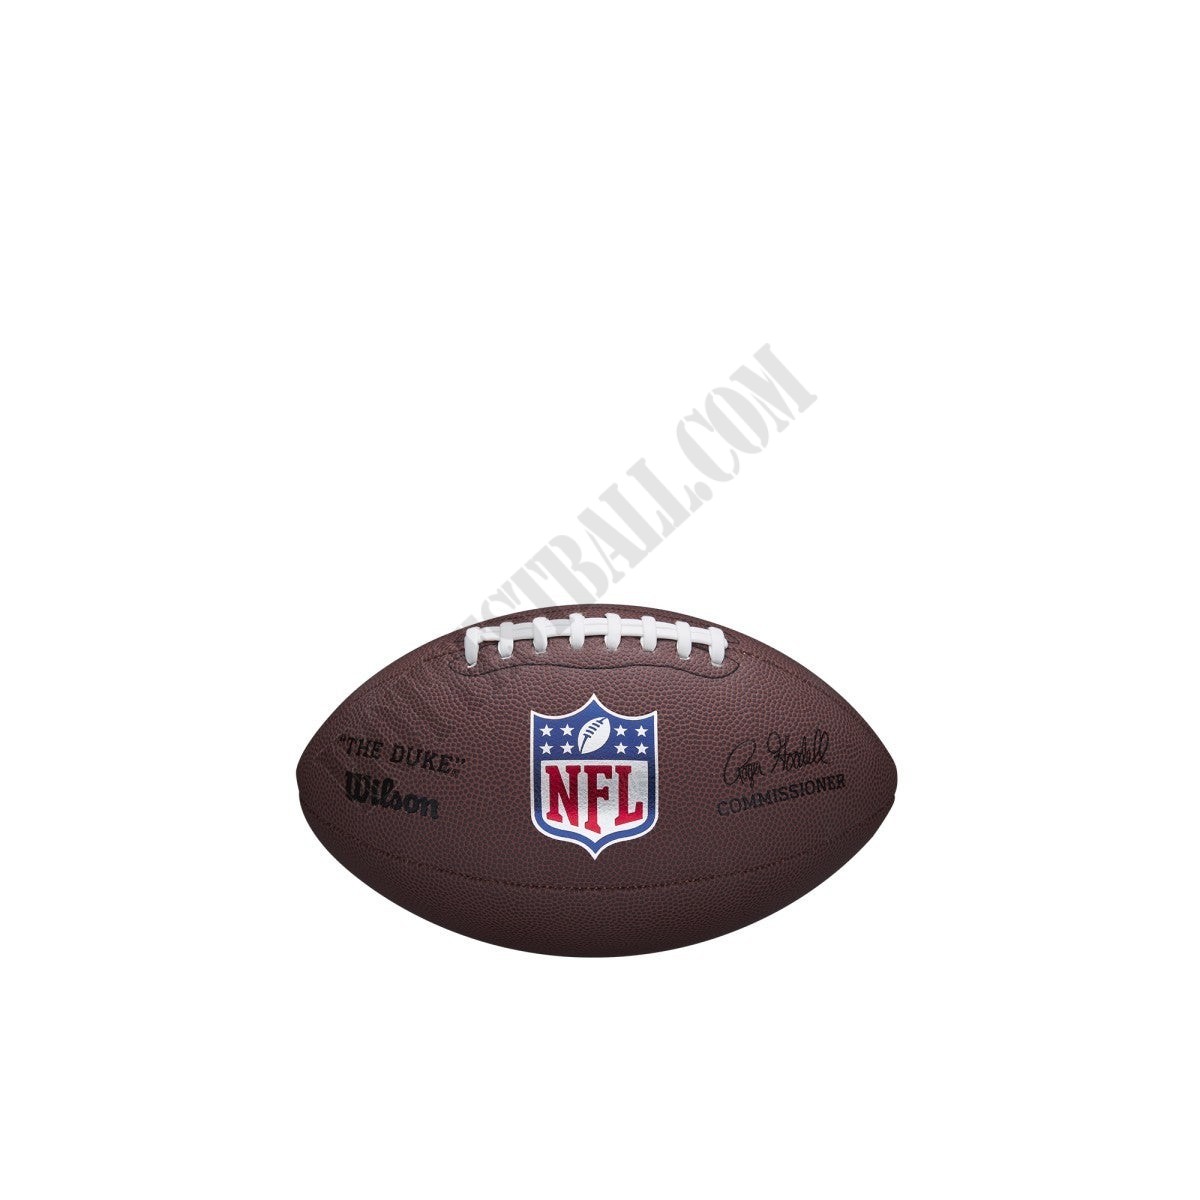 NFL Duke Mini Replica Football - Wilson Discount Store - NFL Duke Mini Replica Football - Wilson Discount Store